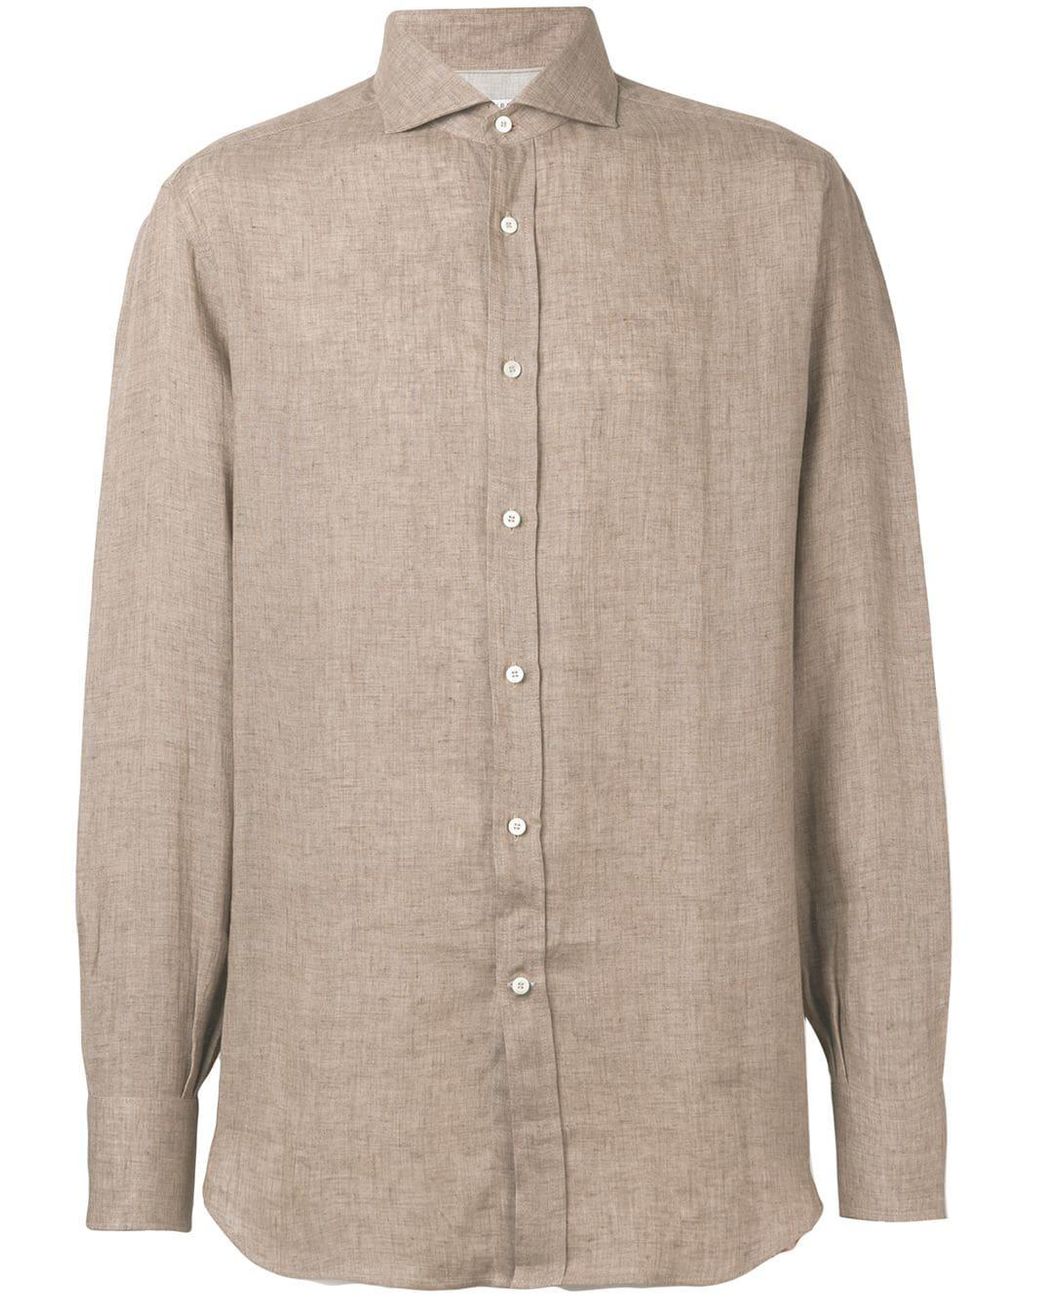 Brunello Cucinelli Linen Pointed Collar Shirt in Brown for Men - Save ...